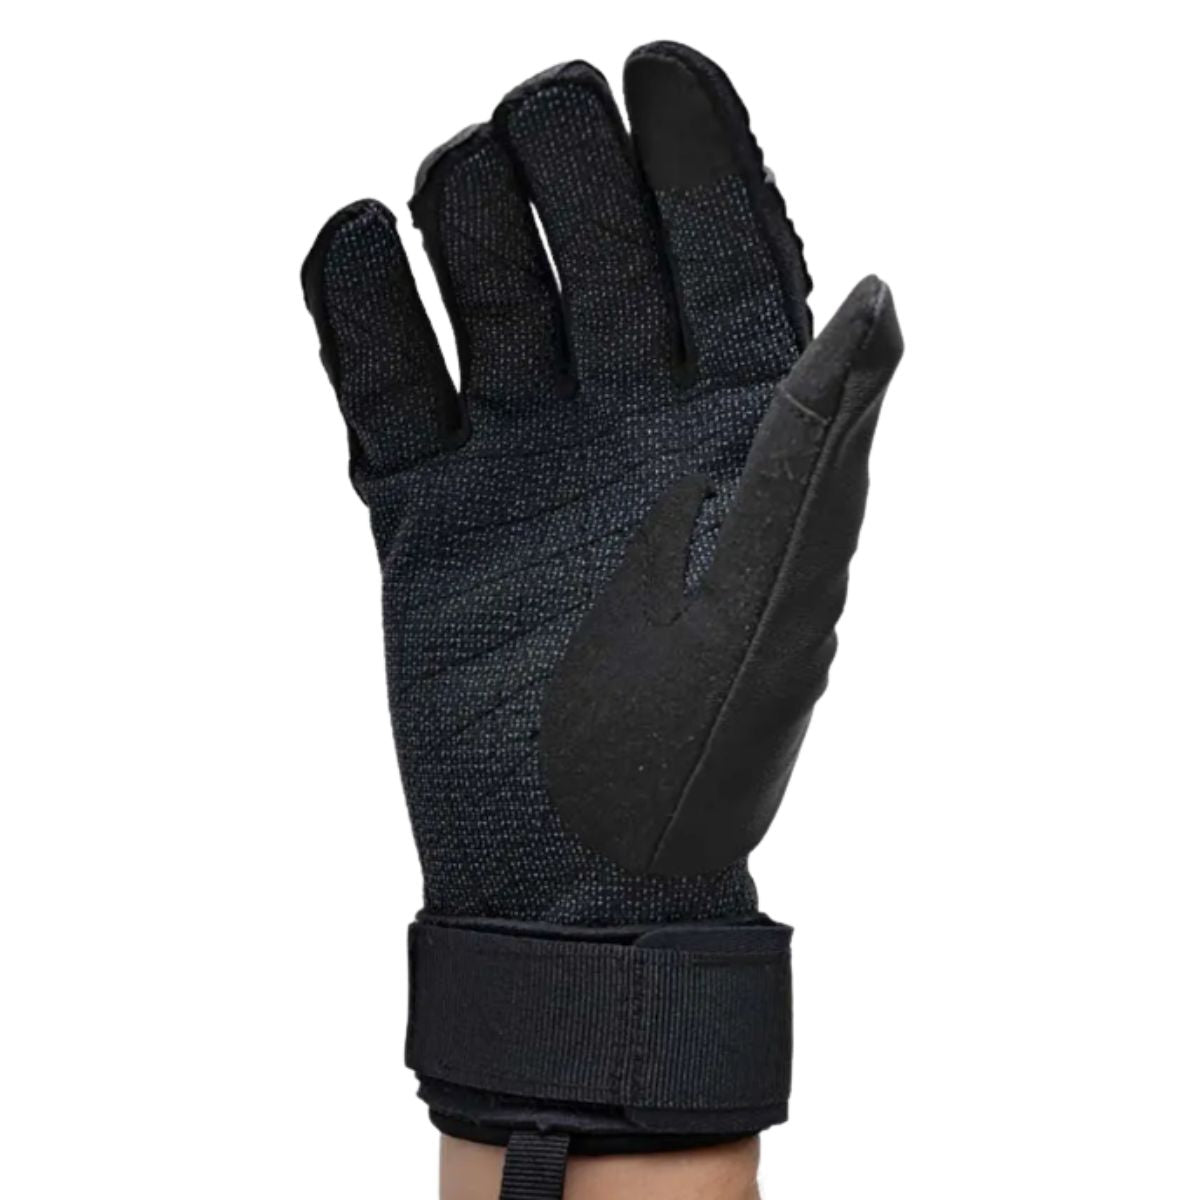 Follow Origins Pro Kevlar Glove in Black - BoardCo